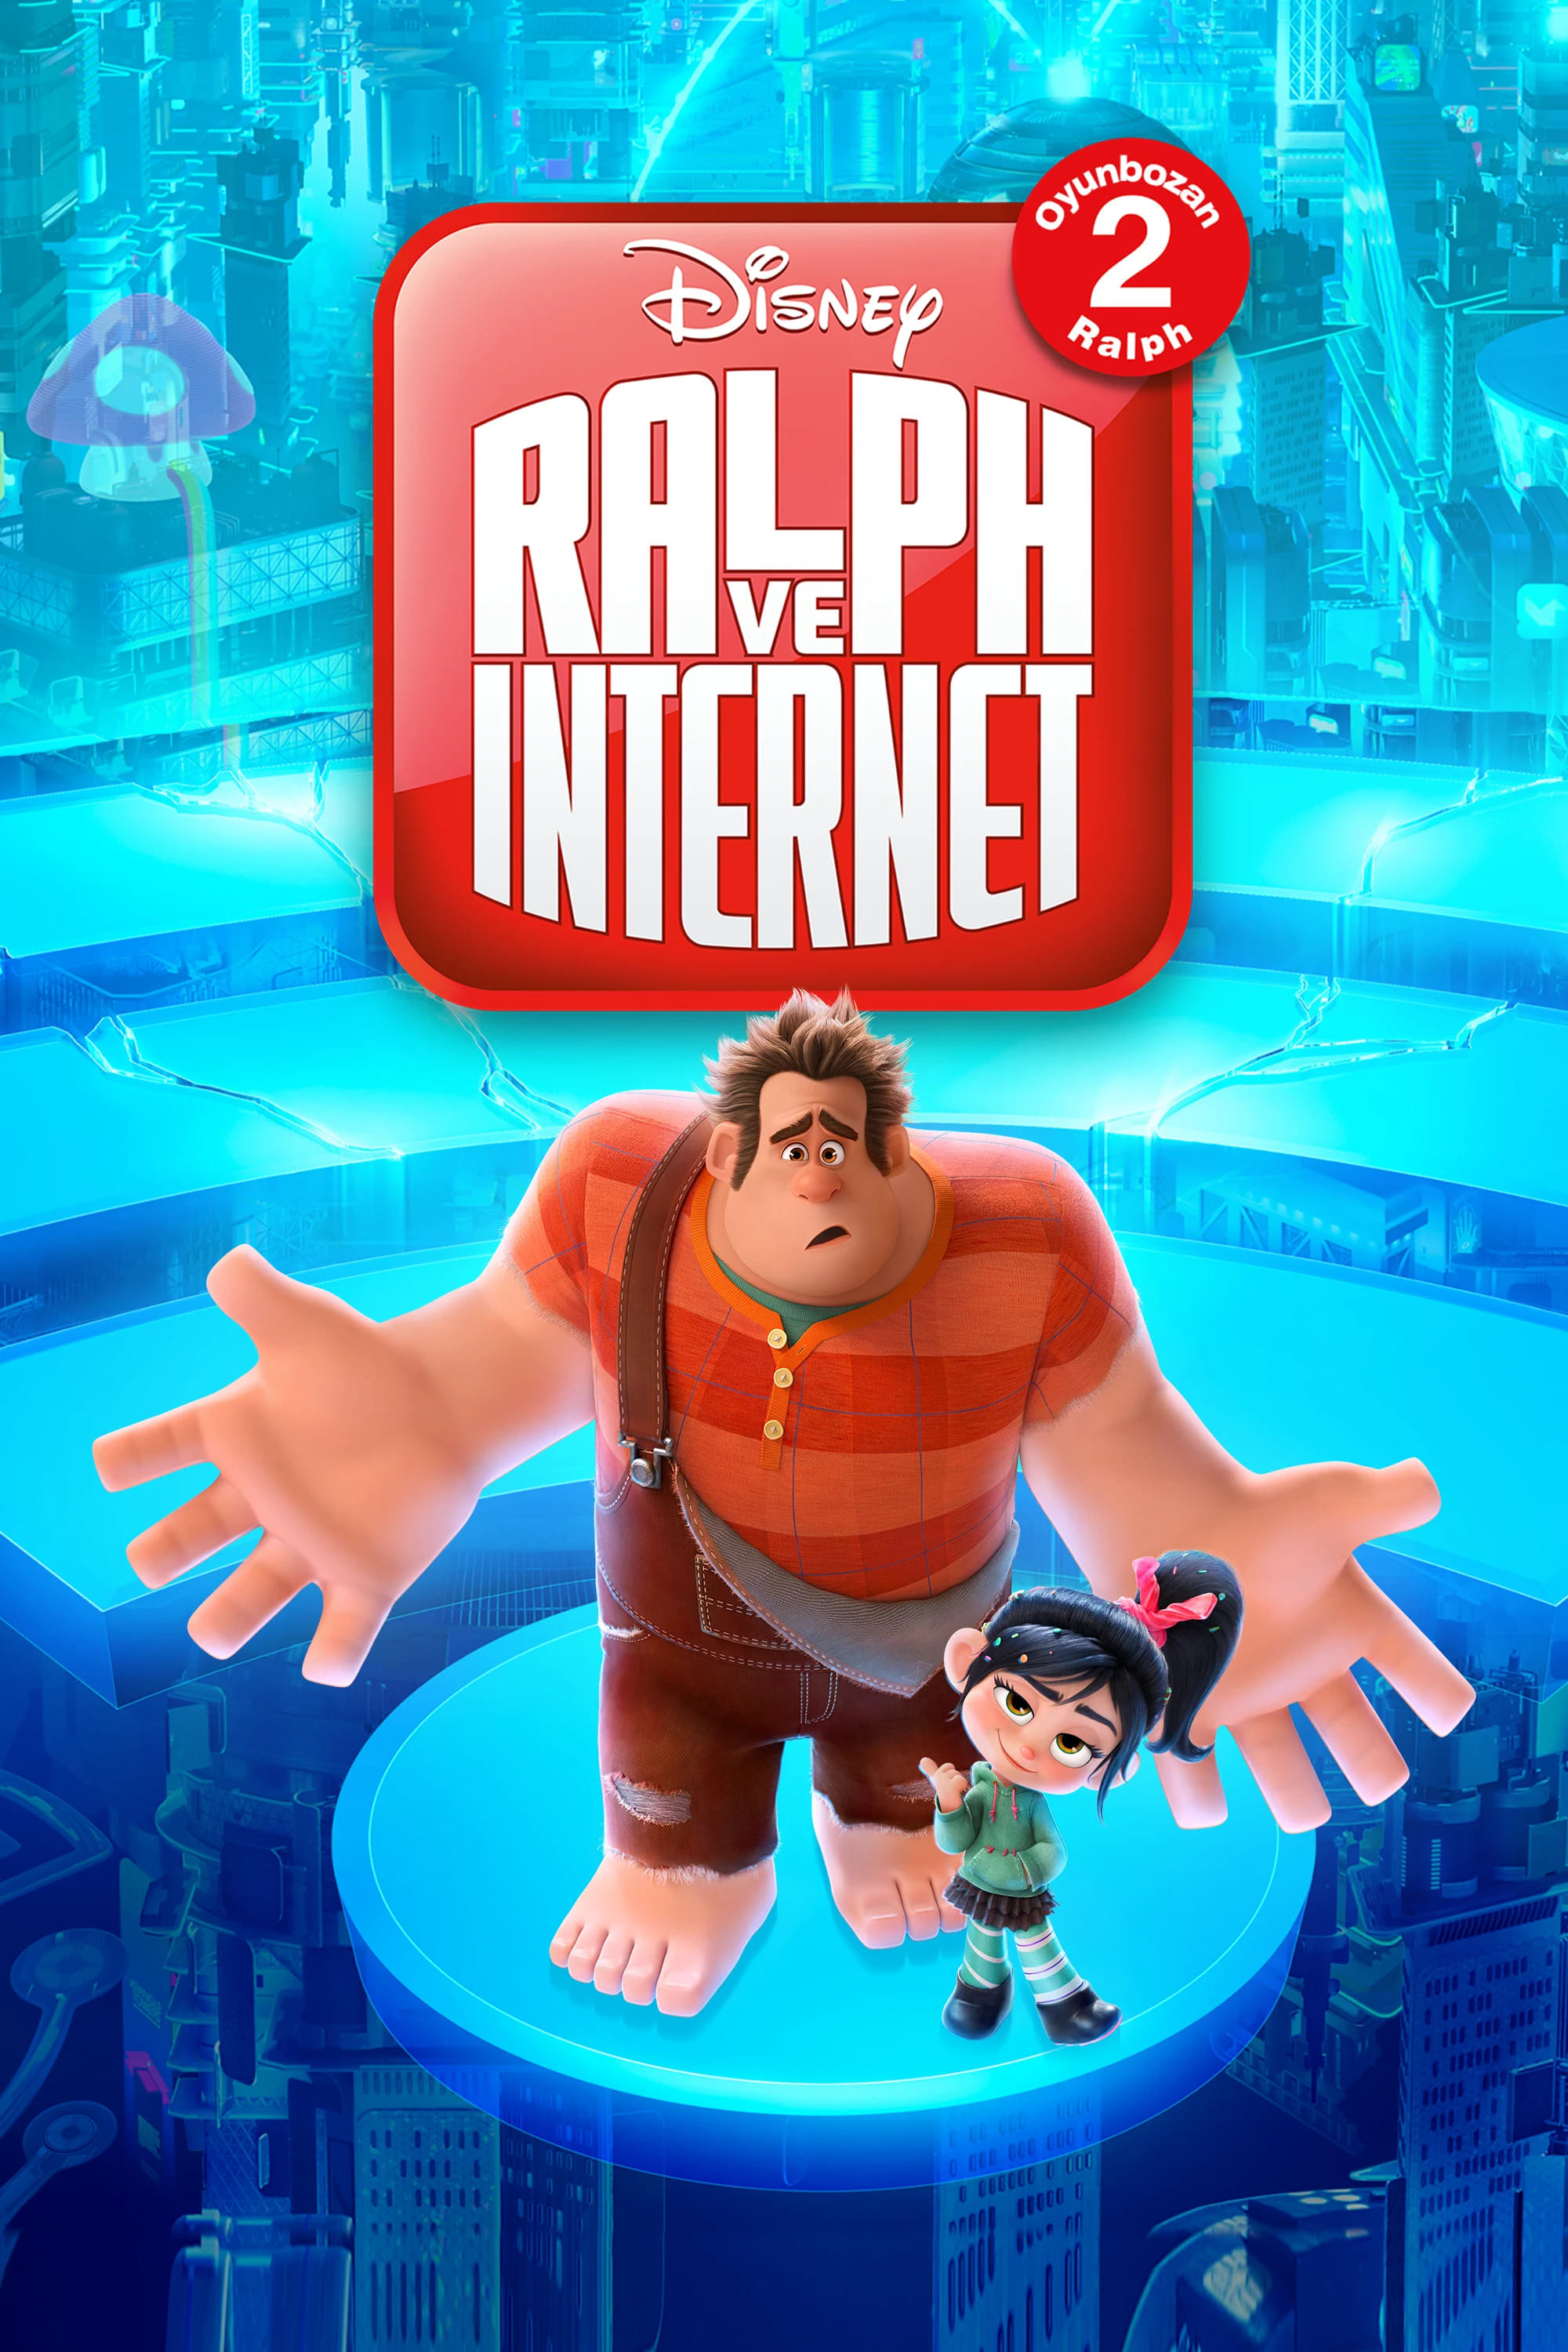 Oyunbozan Ralph 2 internet